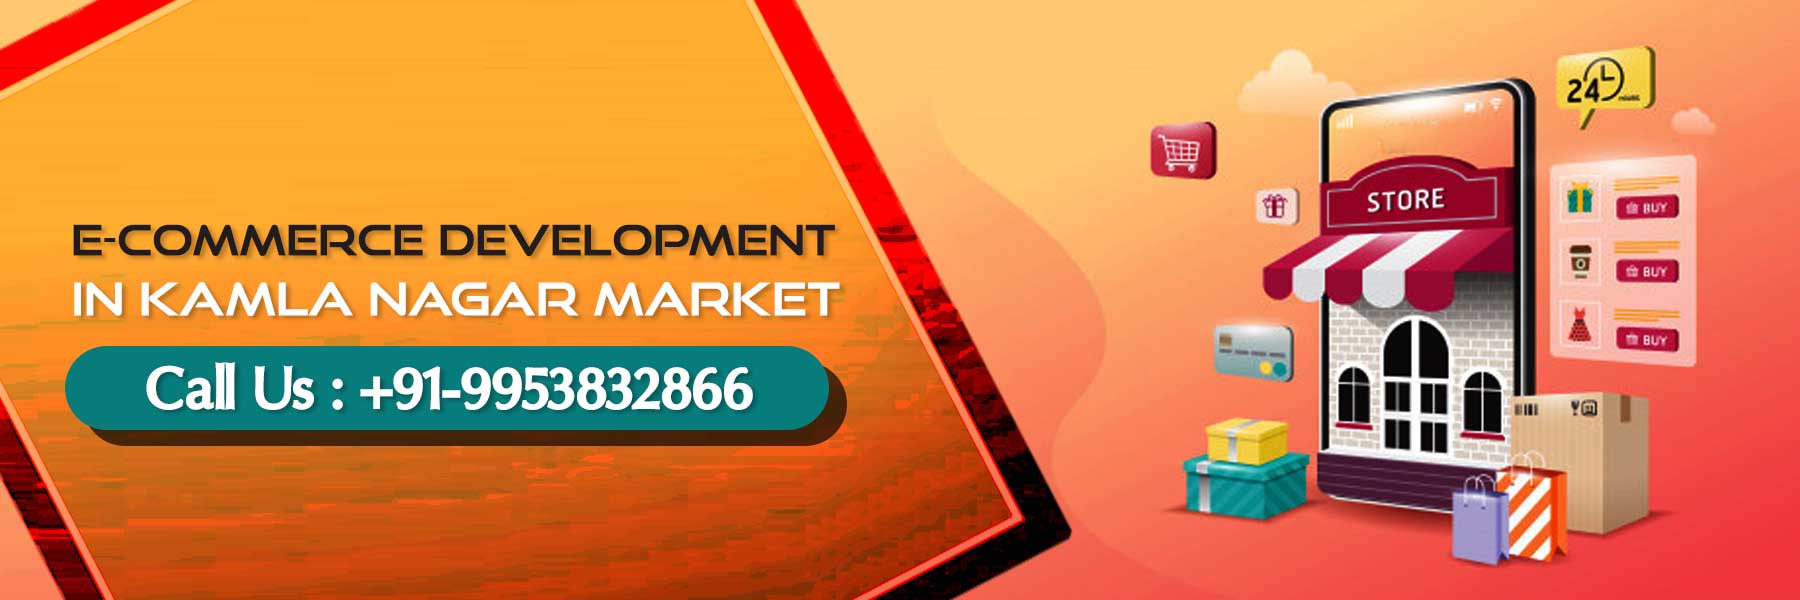 ecommerce development in Kamla Nagar Market